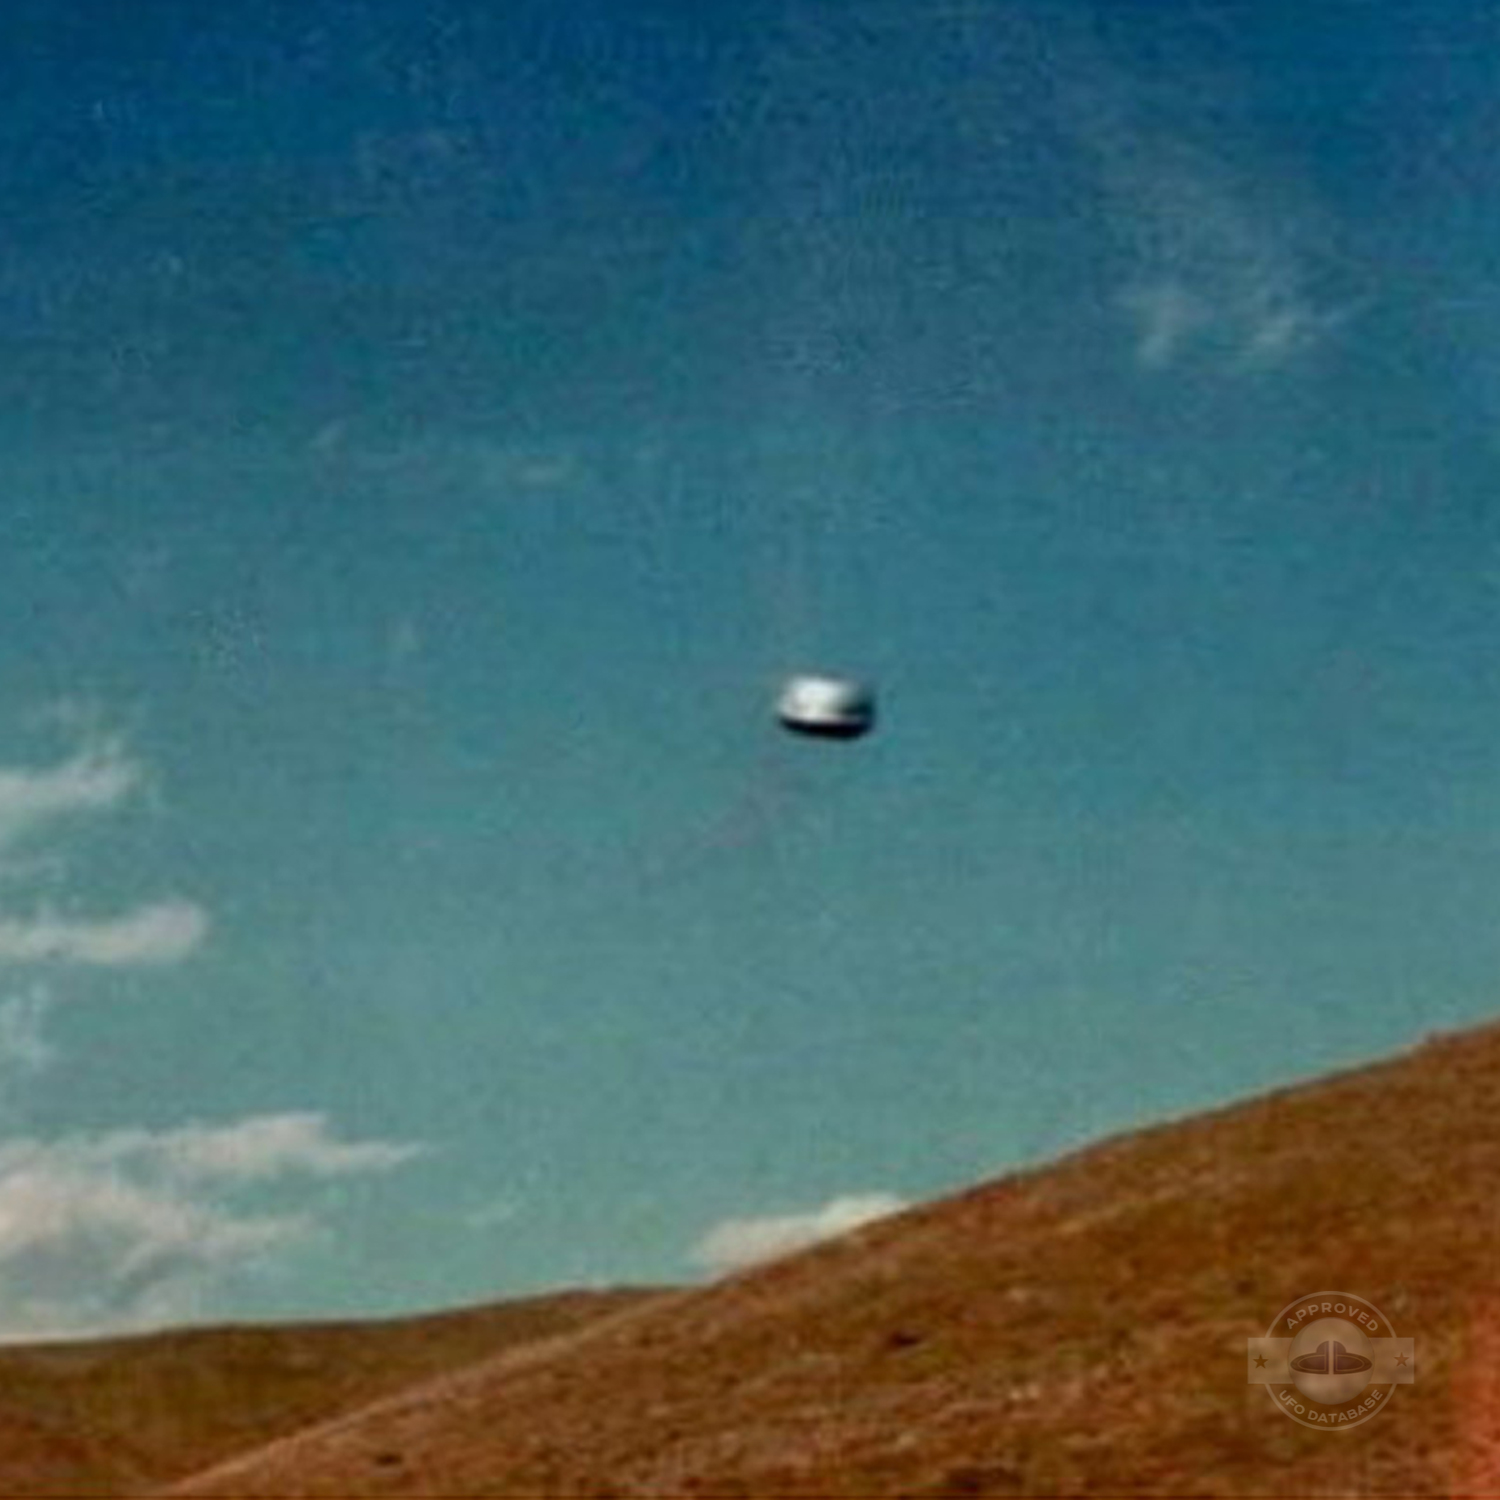 Yamanlar Mountain Peak Hitchhikers UFO Picture | Izmir, Turkey 1996 UFO Picture #182-3